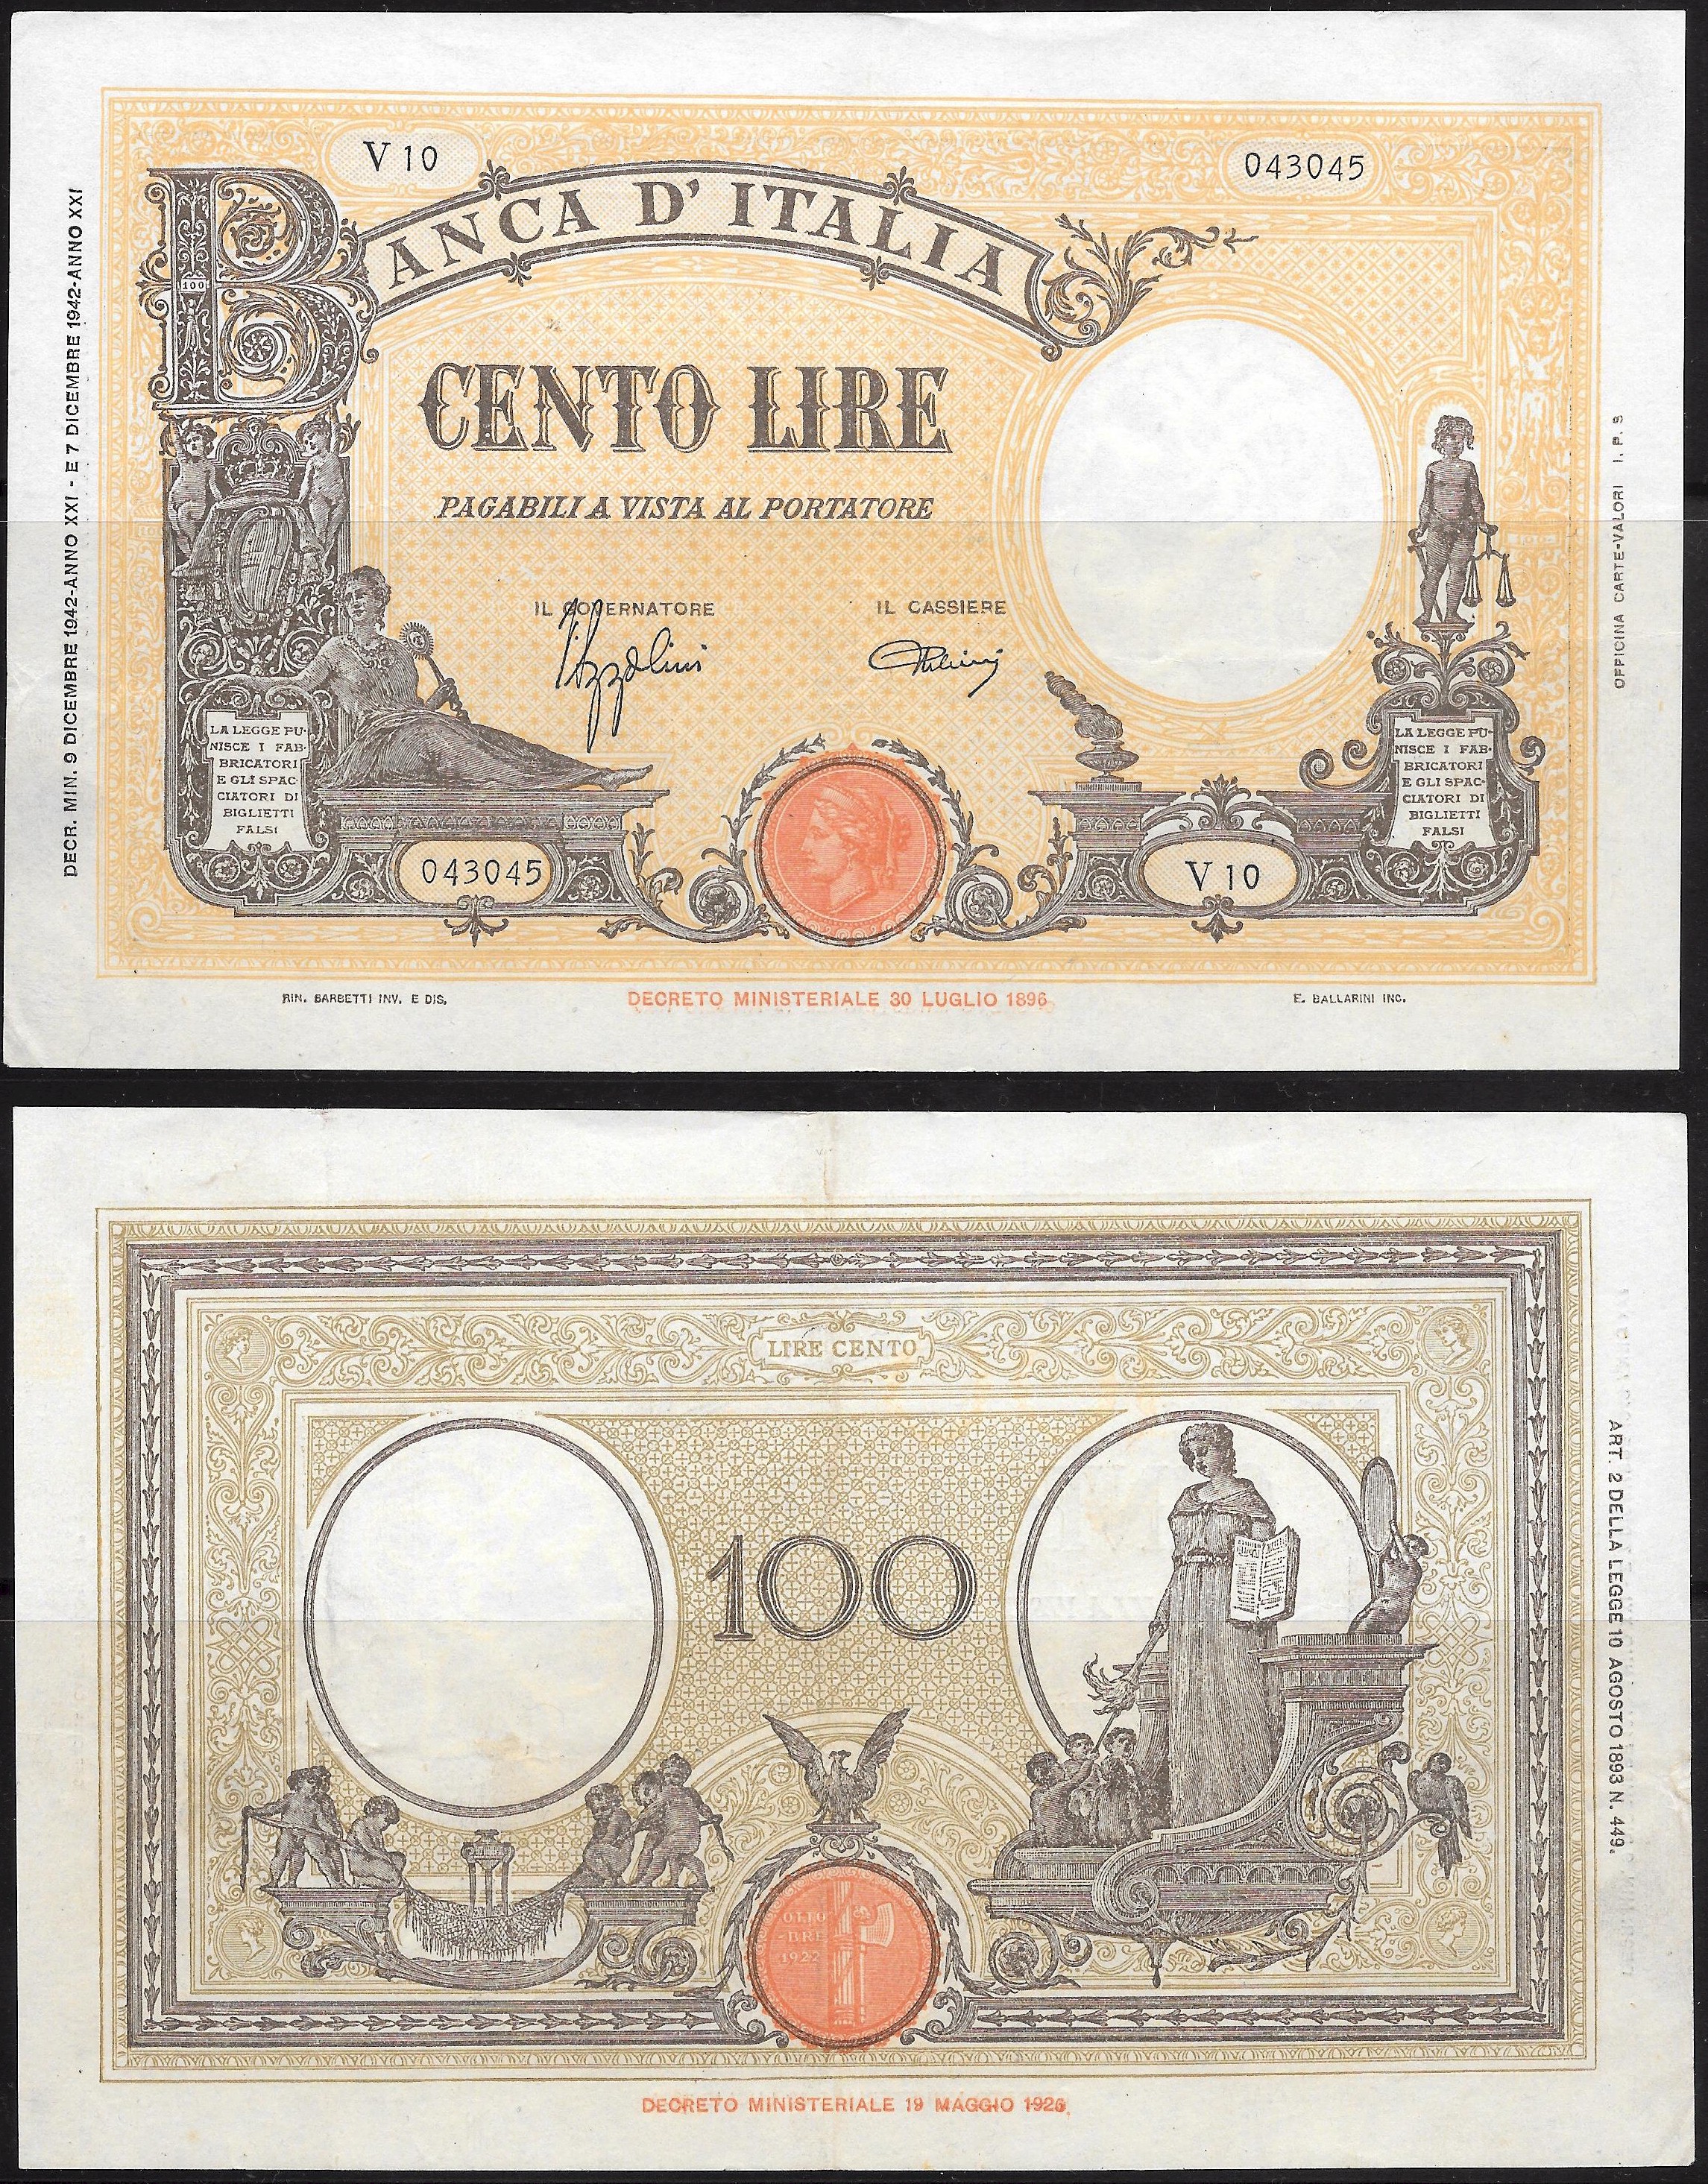 Vittorio Emanuele III - cento lire - dec. min. 09-12-1942